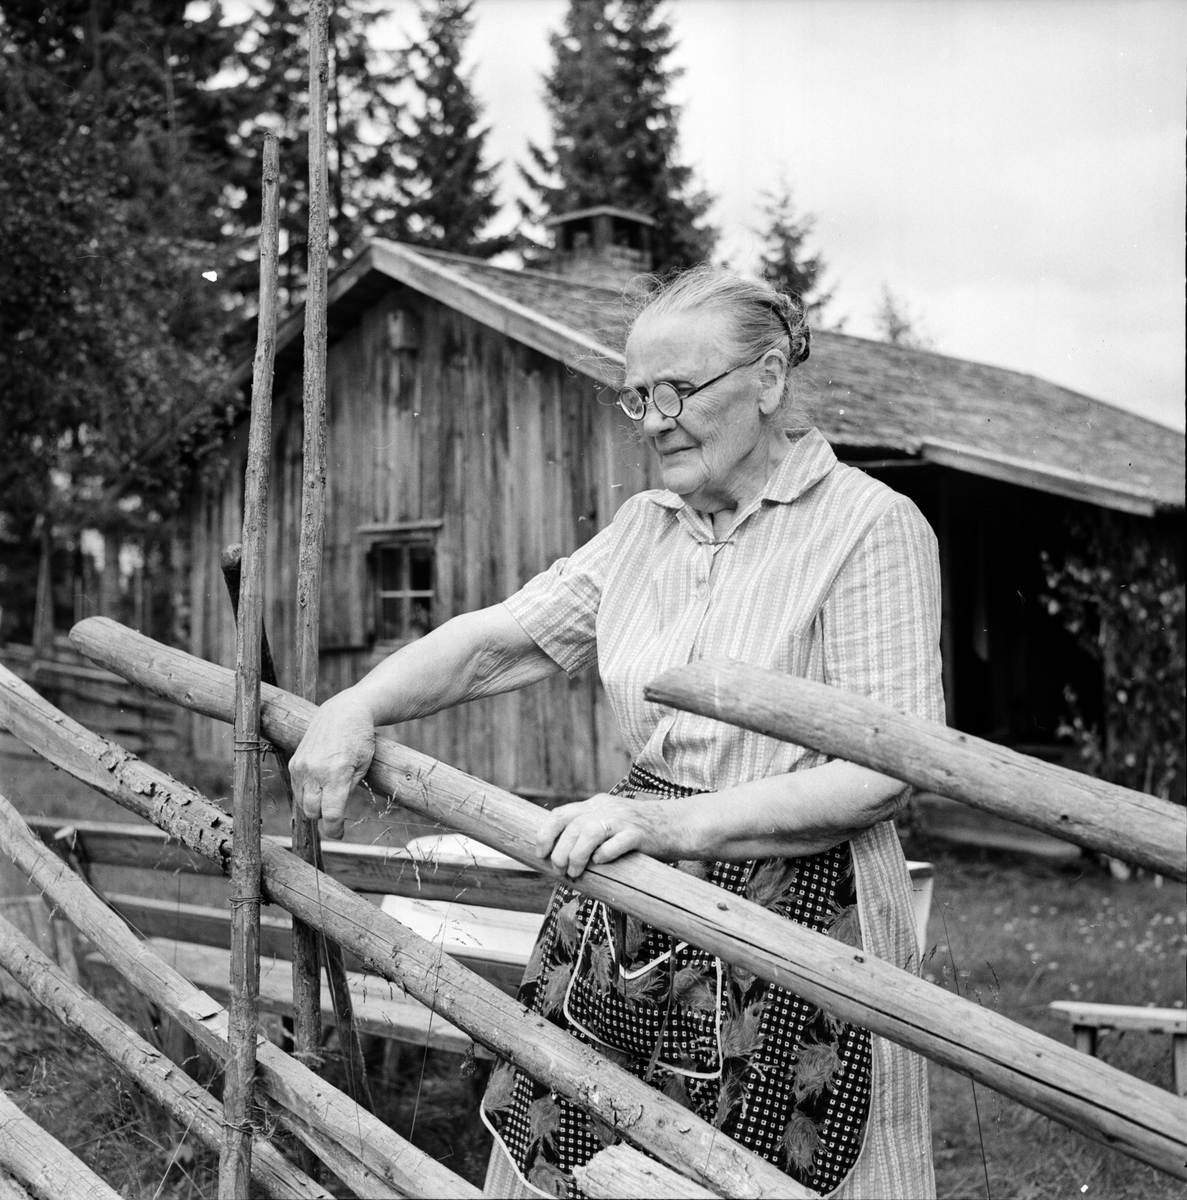 Möckelåsen, Arbrå,
Hos 92-Åriga Bopigan Margareta Kallin,
2 Aug 1966
